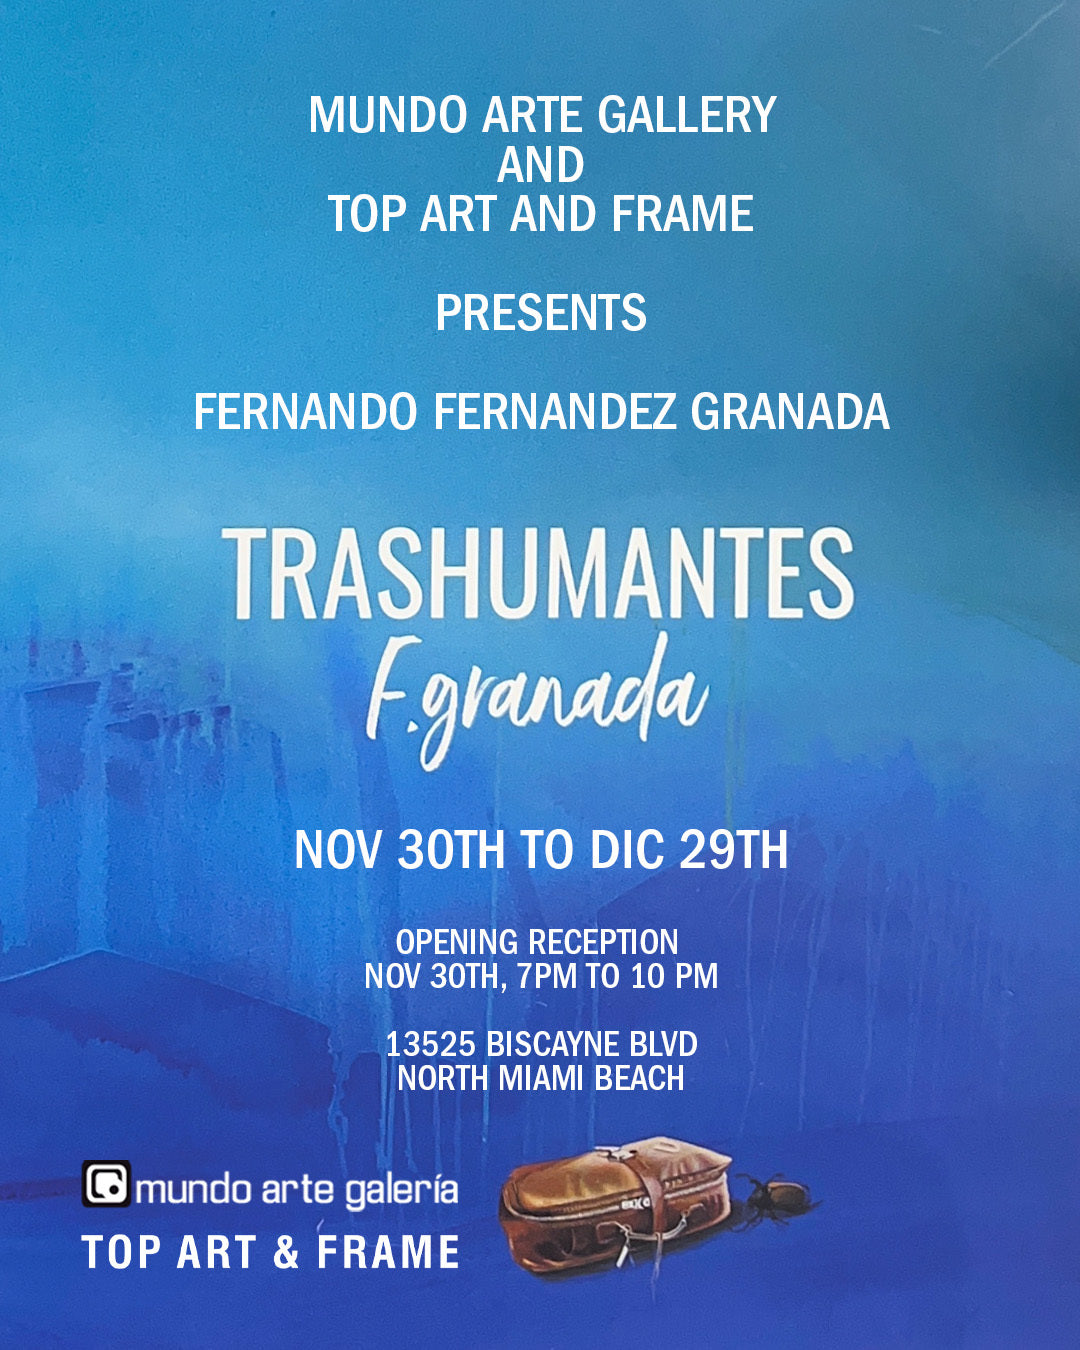 Fernandez Granada, arte moderno y Top Art and Frame